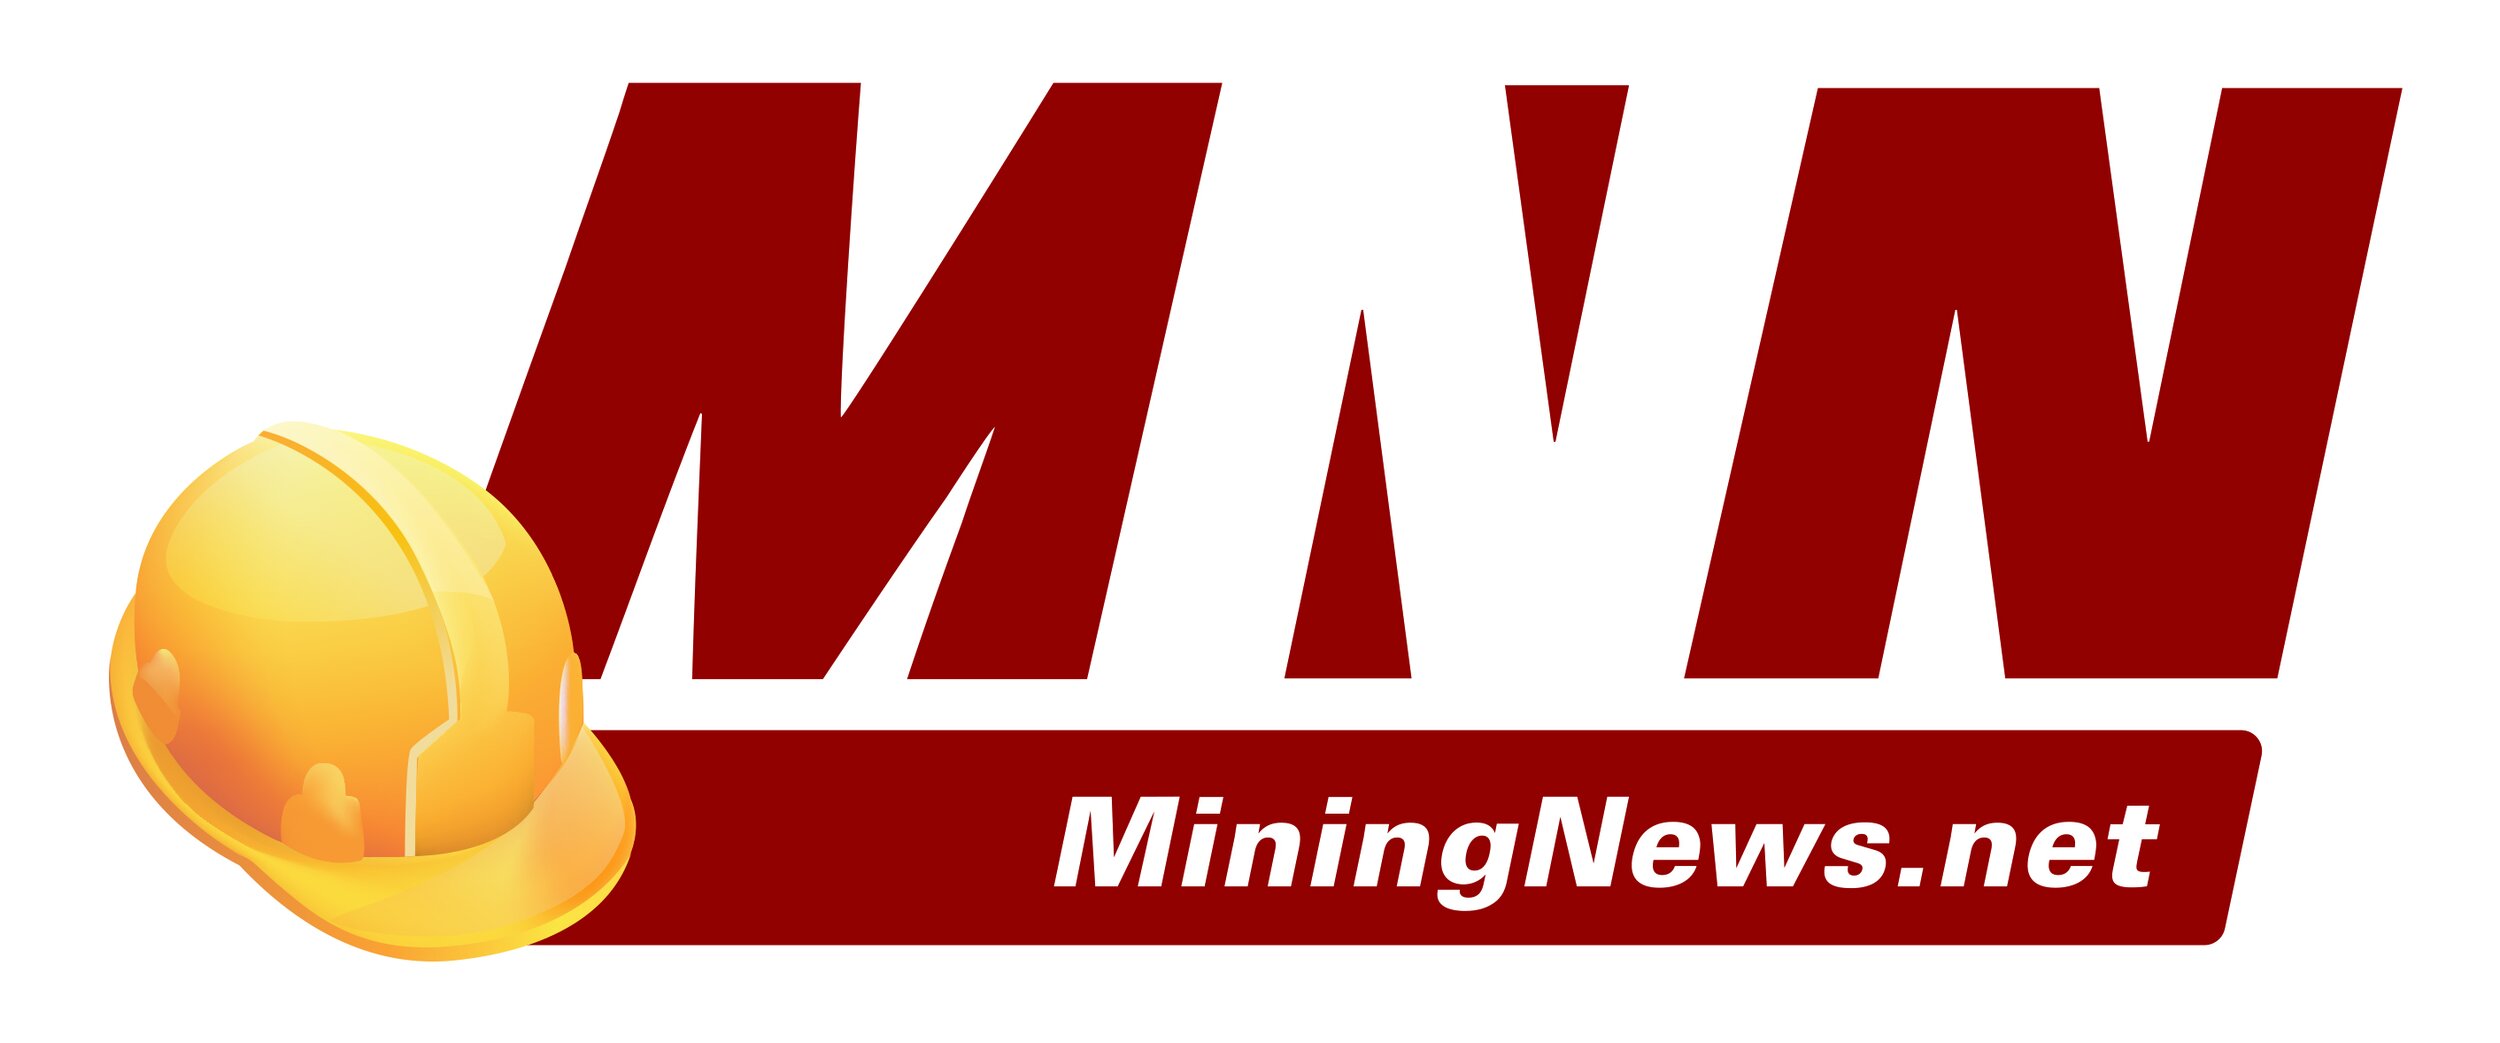 Mining News